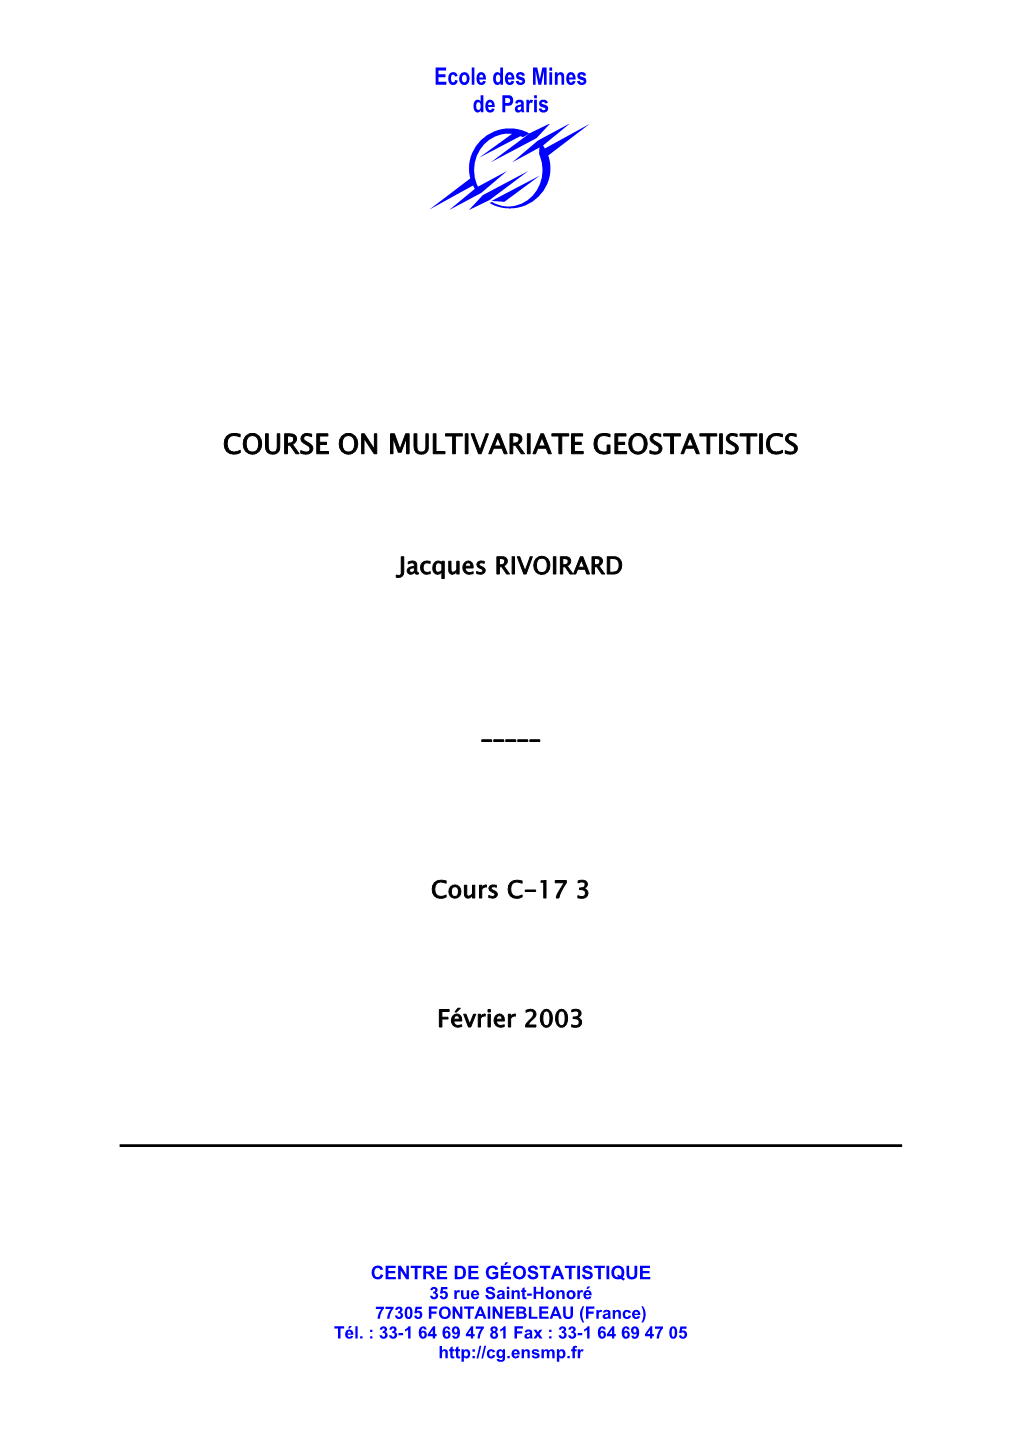 From Rivoirard, Course on Multivariate Geostatistics